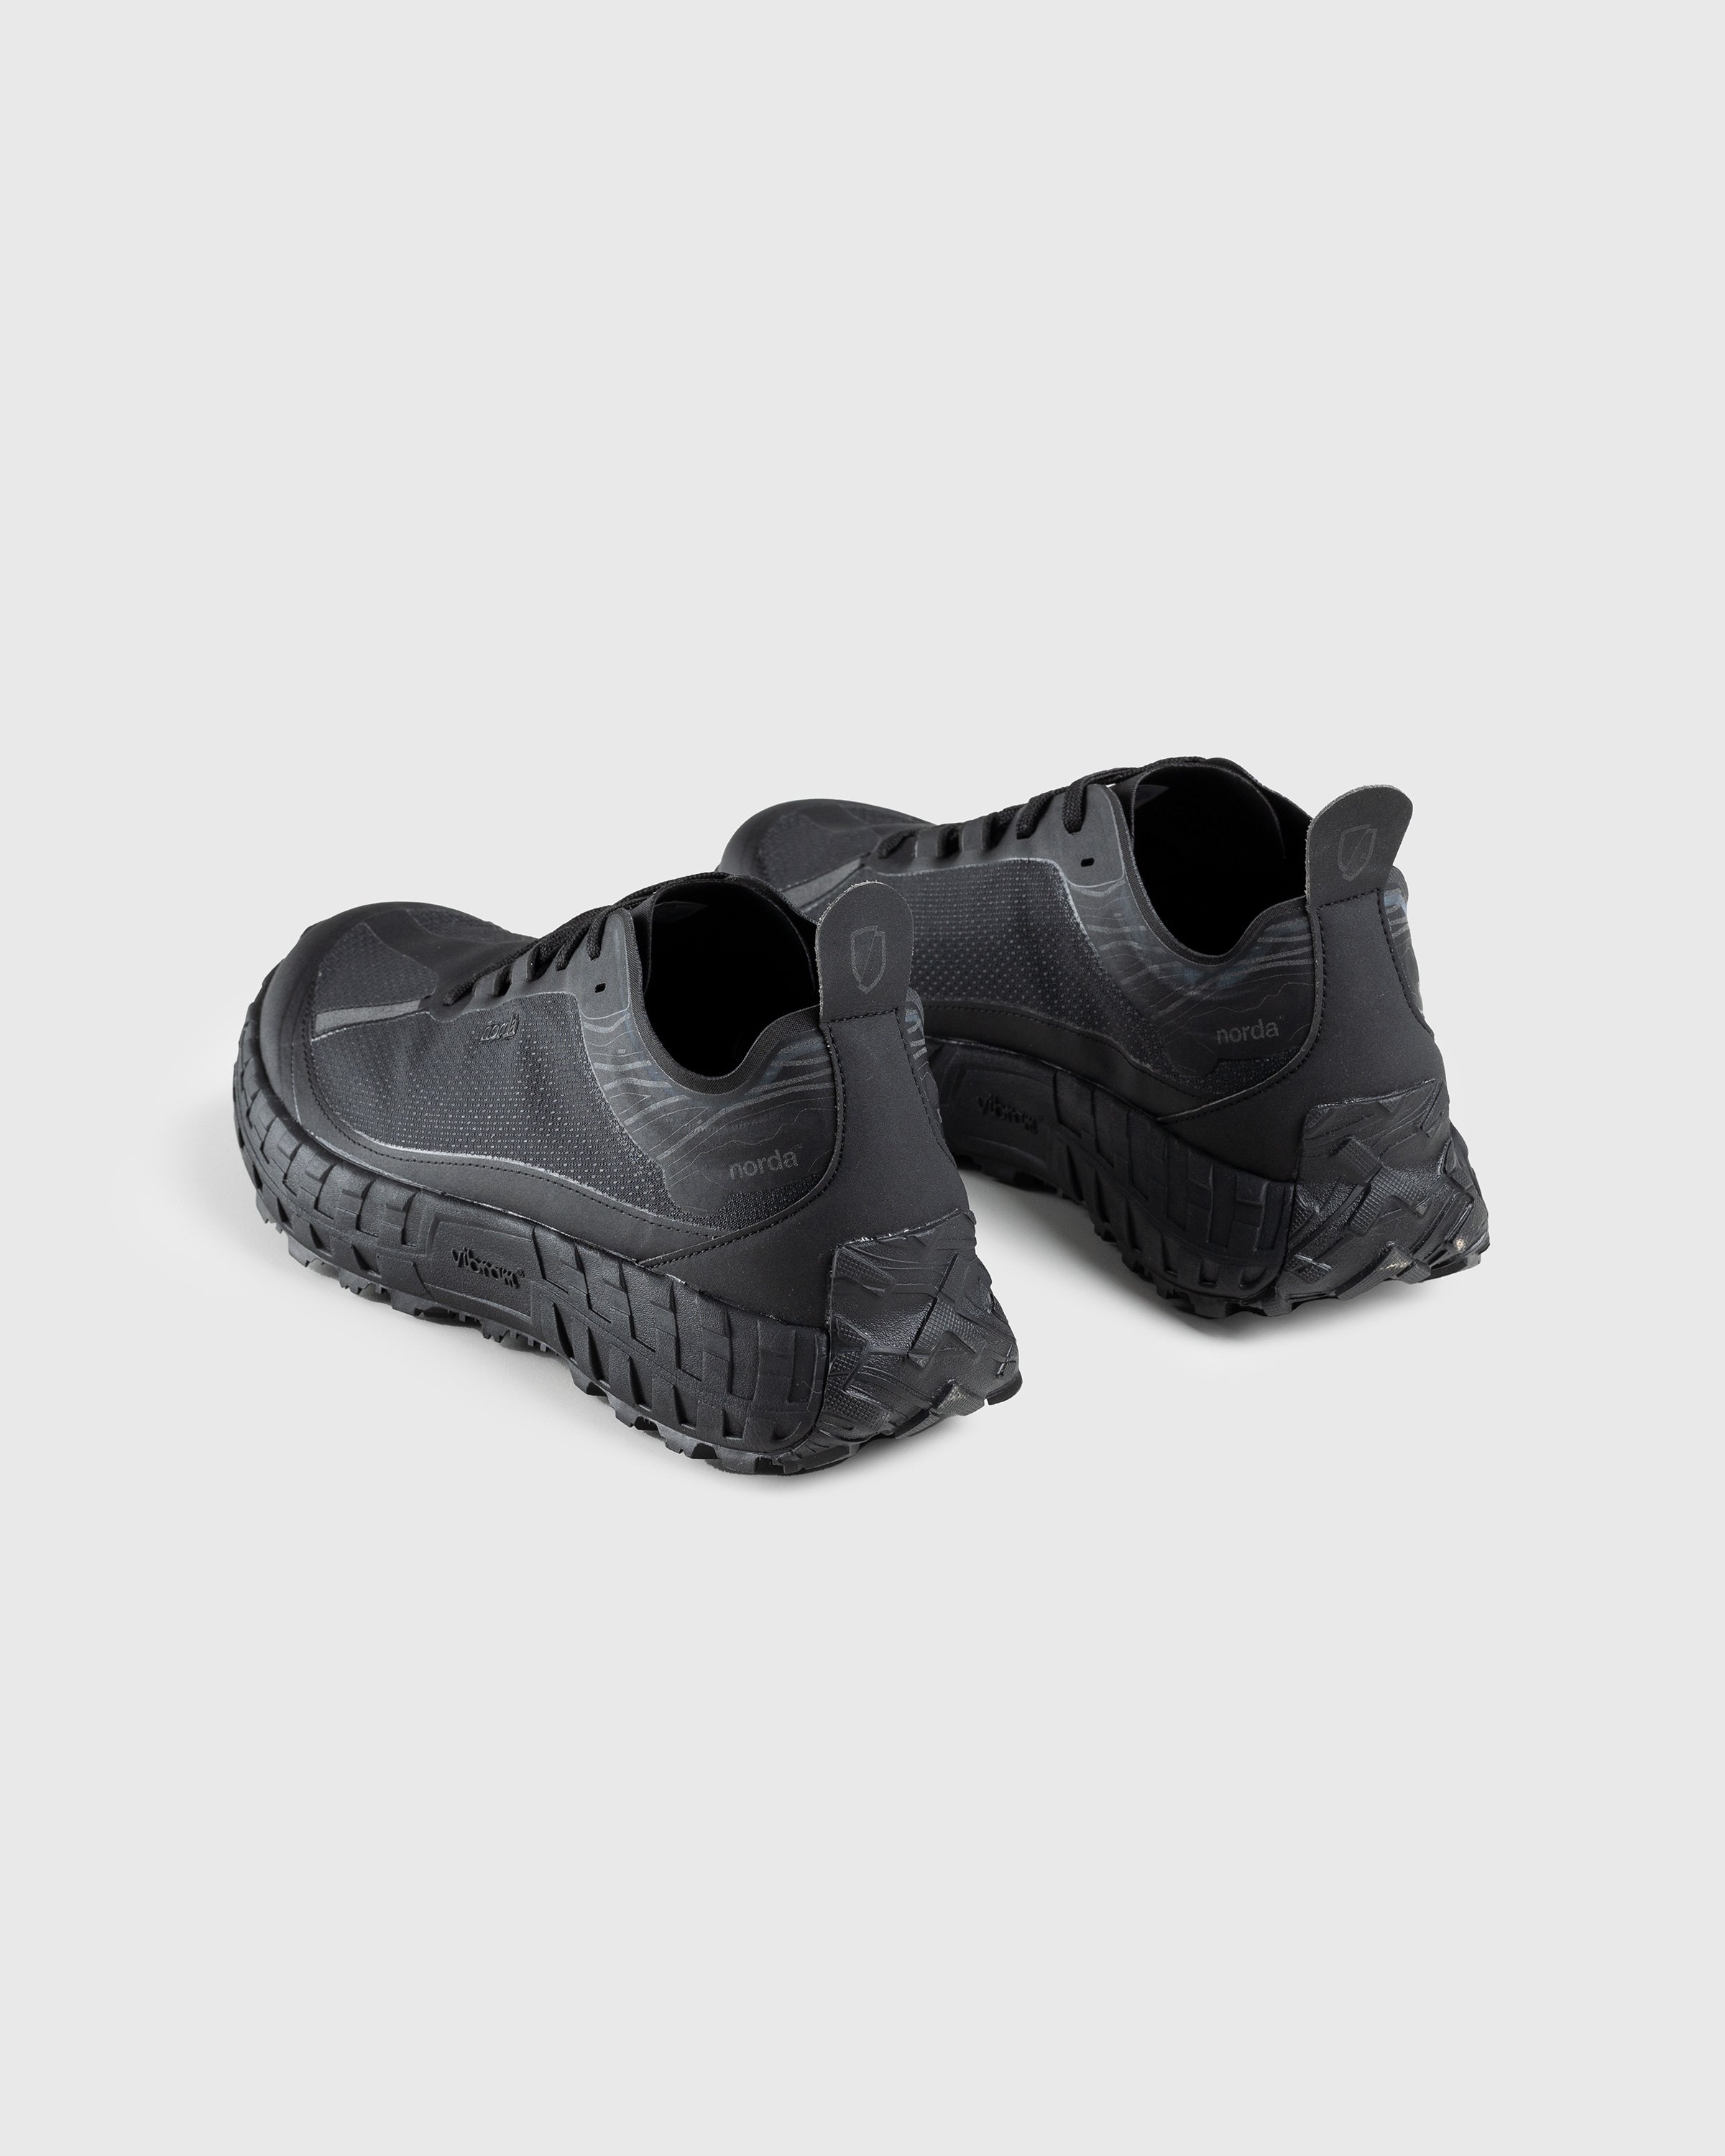 Norda - 001 LTD Edition G+ Graphene Black - Footwear - Black - Image 4